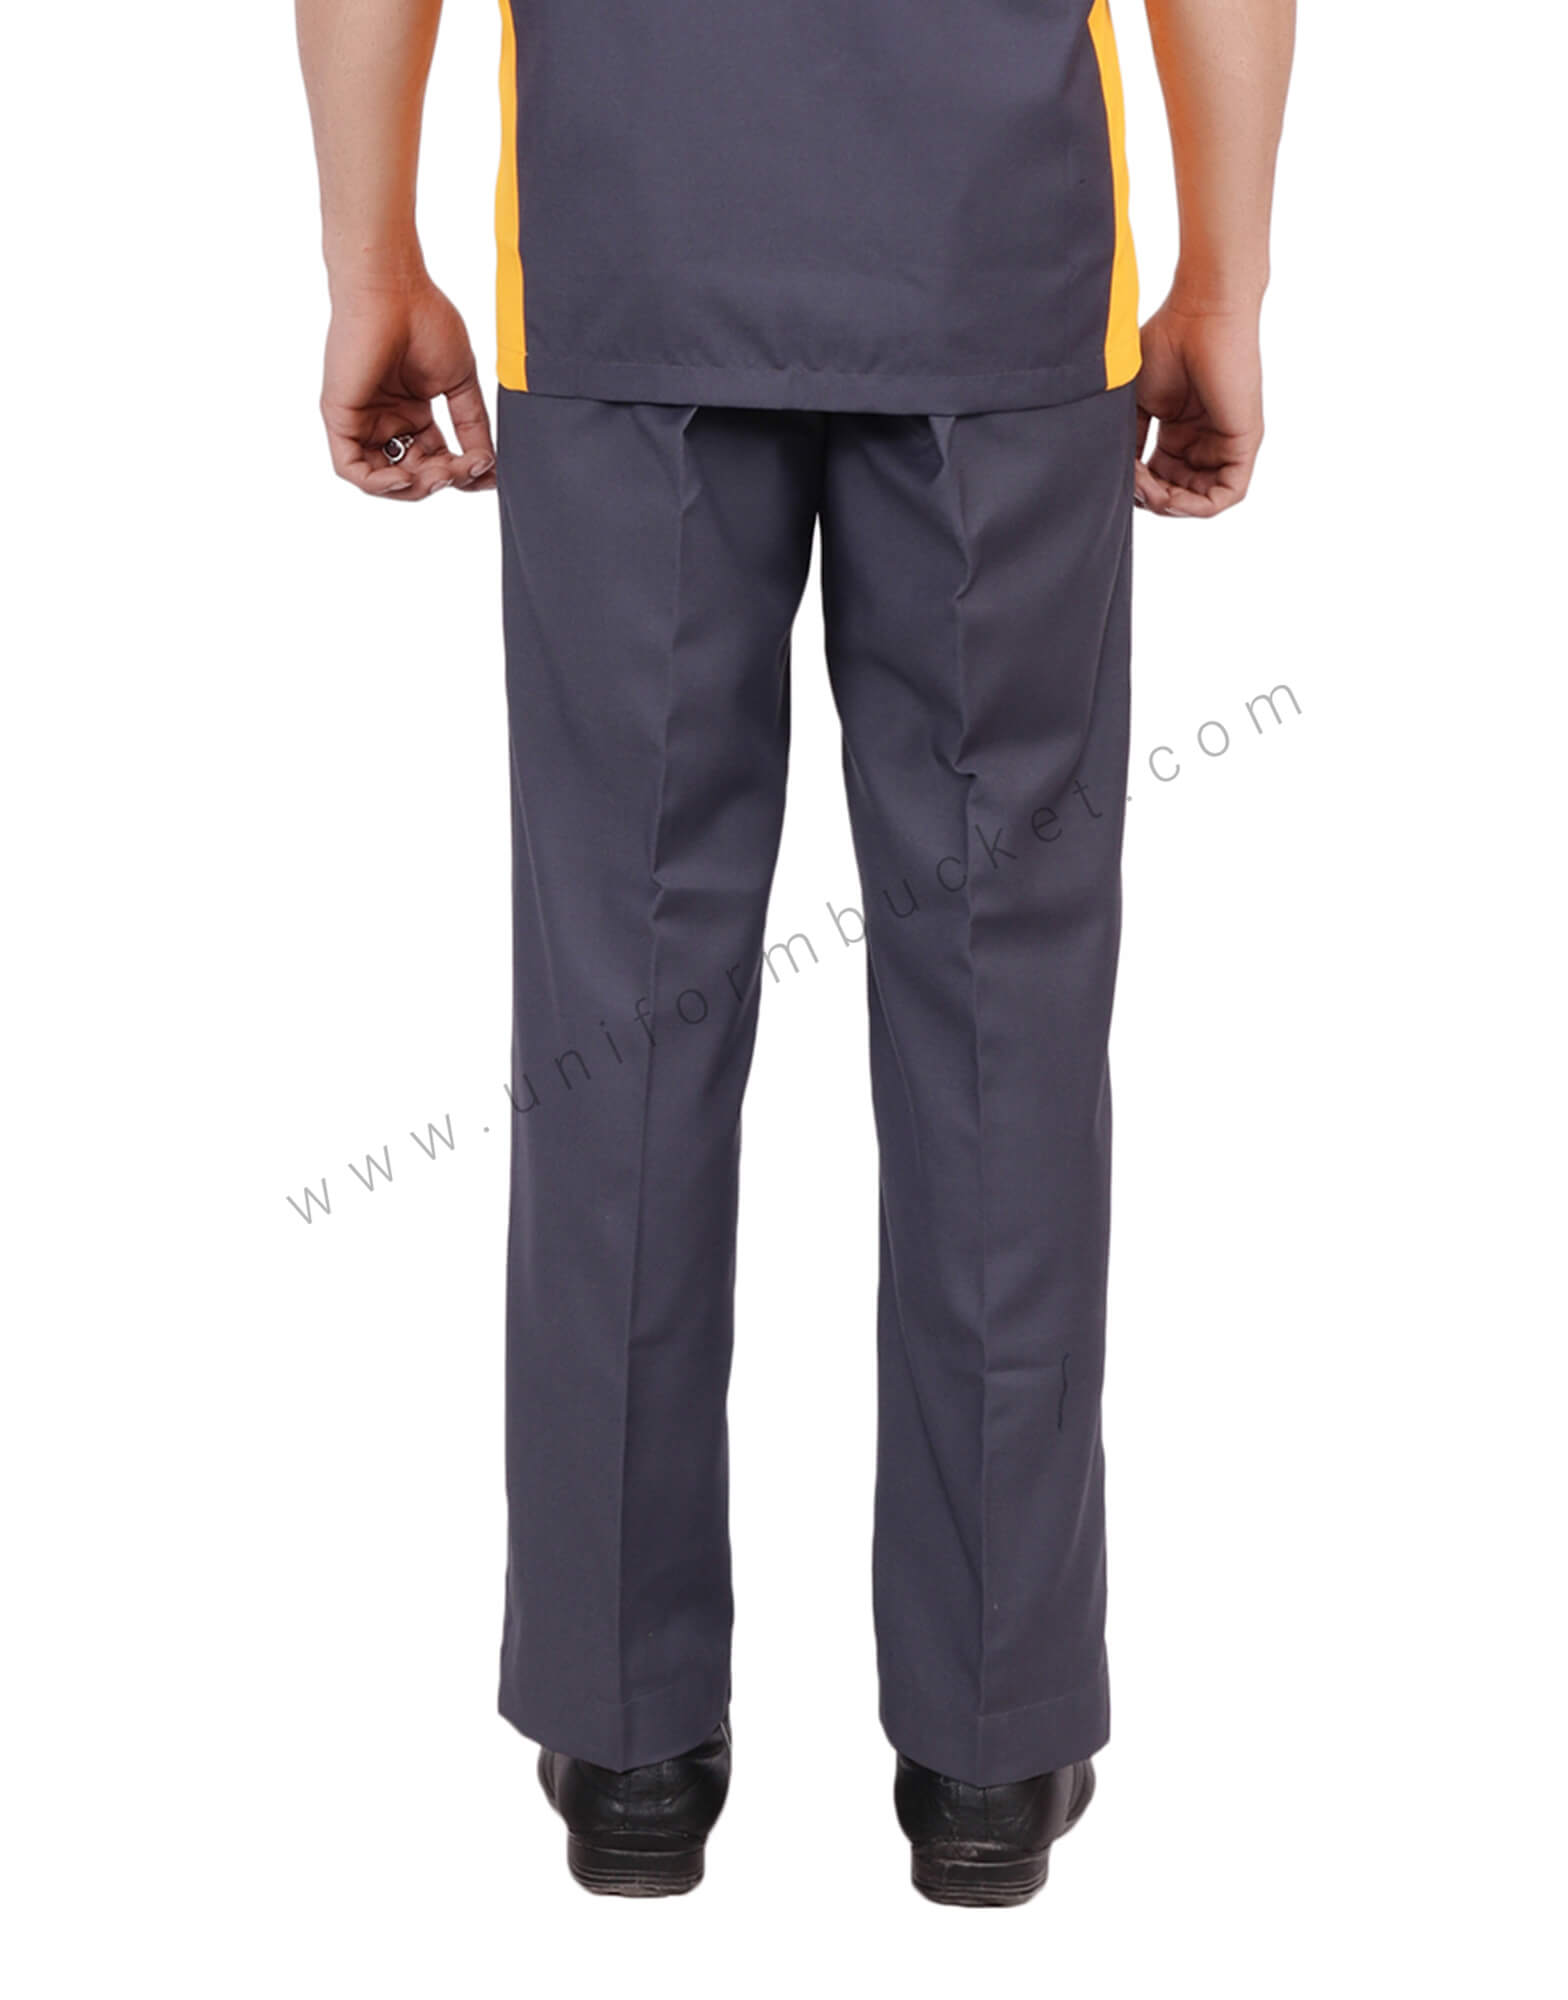 Buy Qaswa Mens Workwear Trousers Safety Cargo Combat Cordura Knee  Reinforced Utility Work Pant Grey at Amazonin